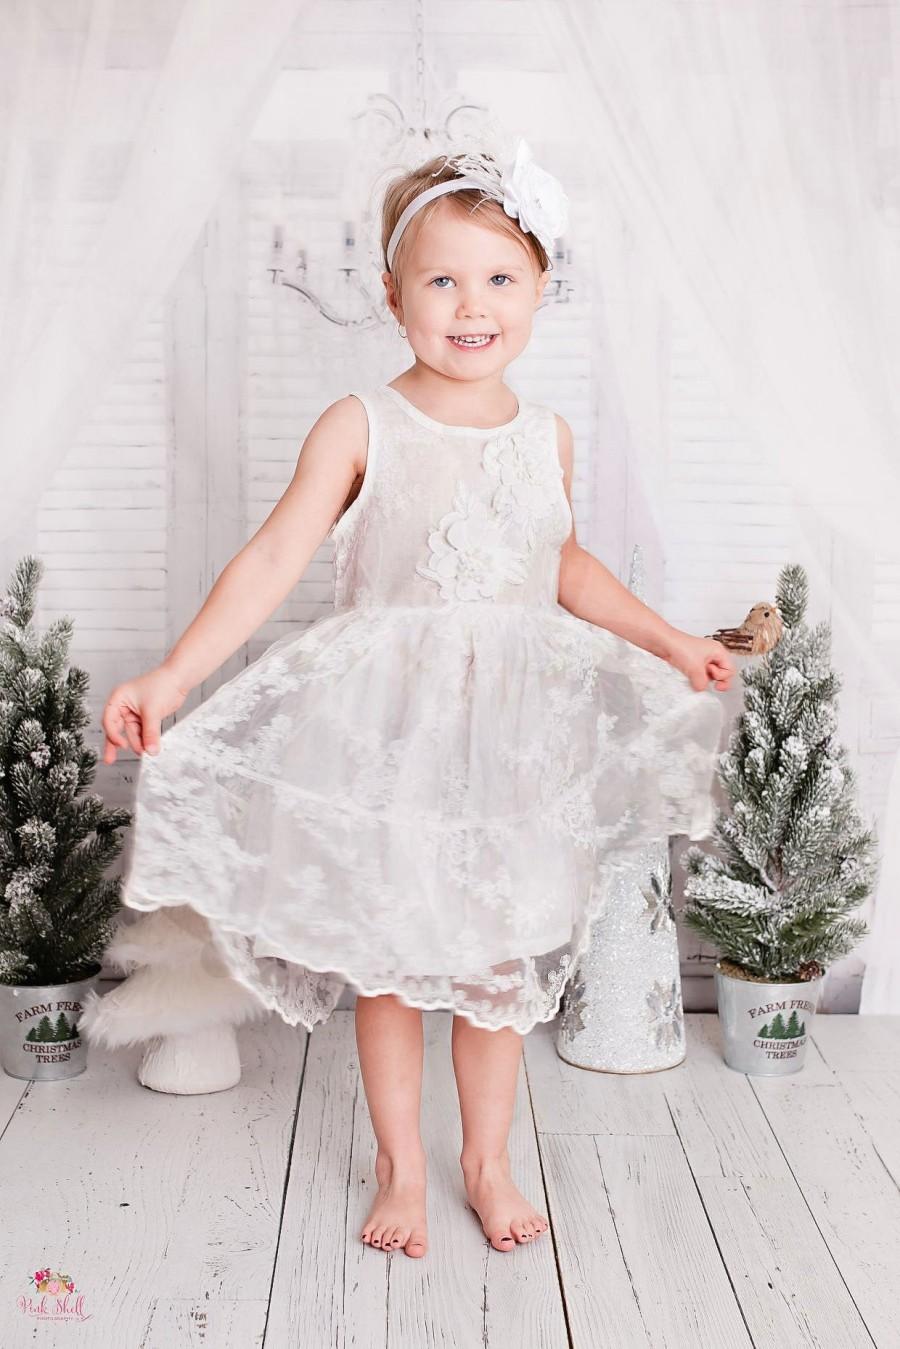 Wedding - Rustic White Flower Girl Dress, White Lace Dress- Baptism / Christening Dress, Country Style Flower Girl Dress